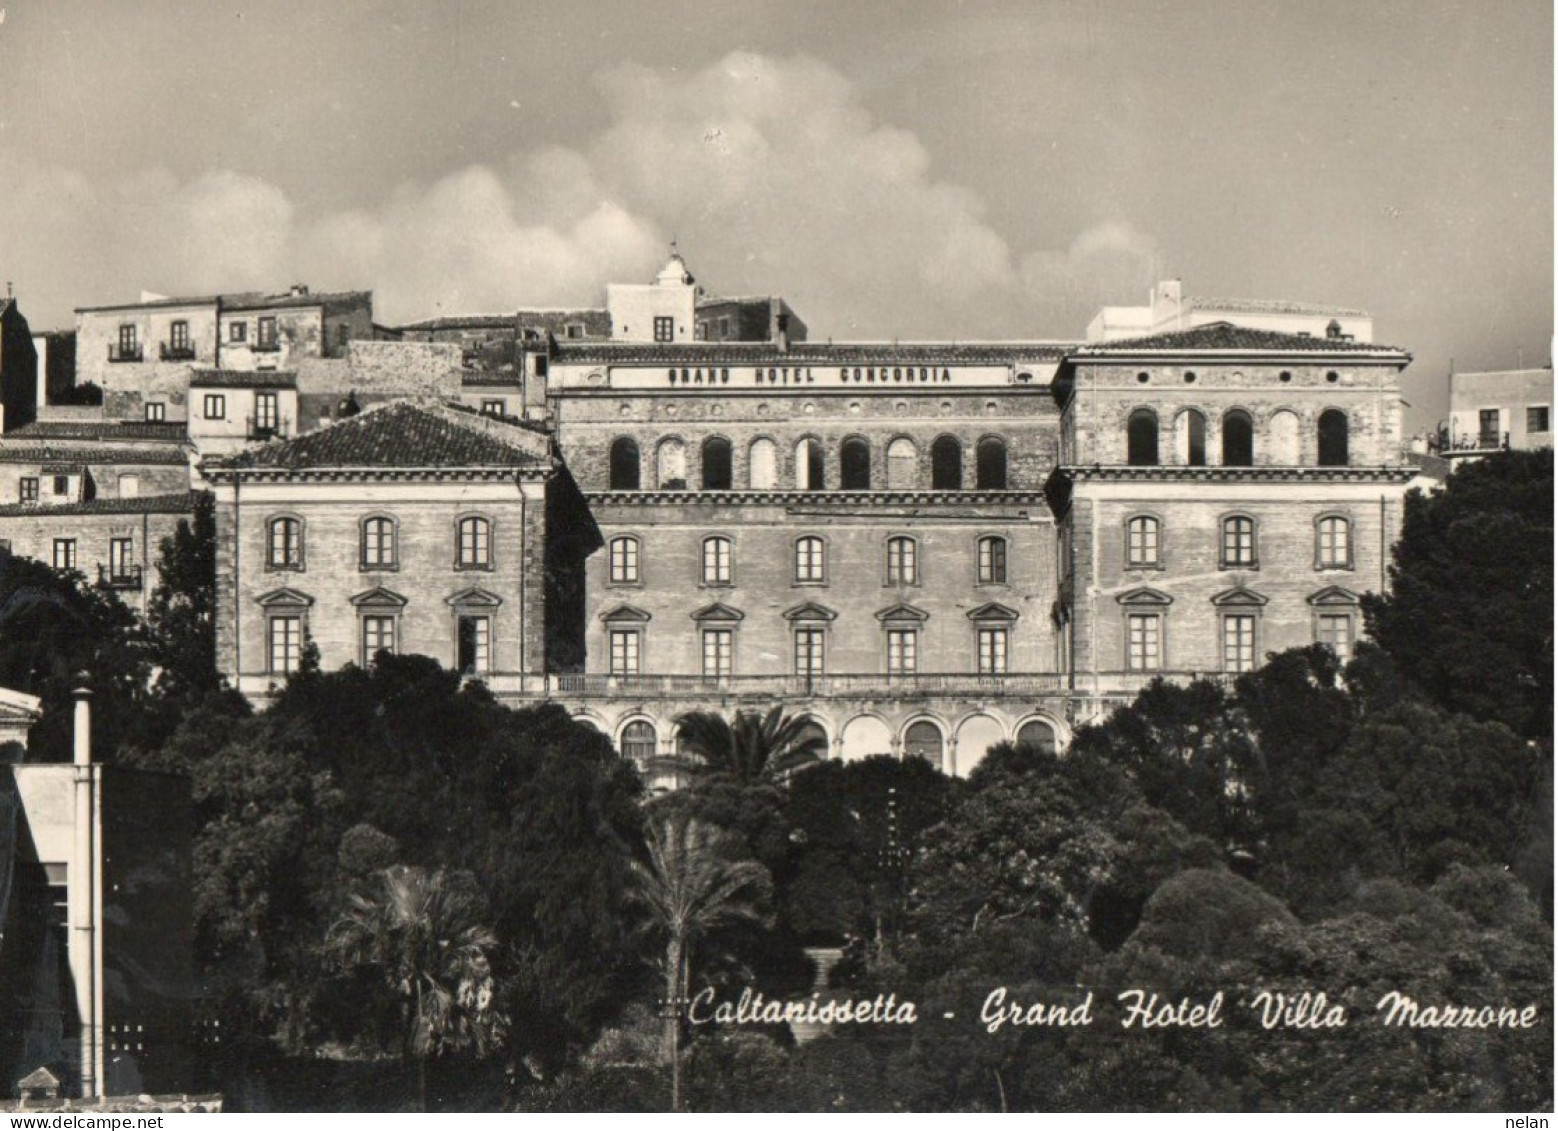 CALTANISSETTA - GRAND HOTEL VILLA MAZZONE - F.G. - Caltanissetta